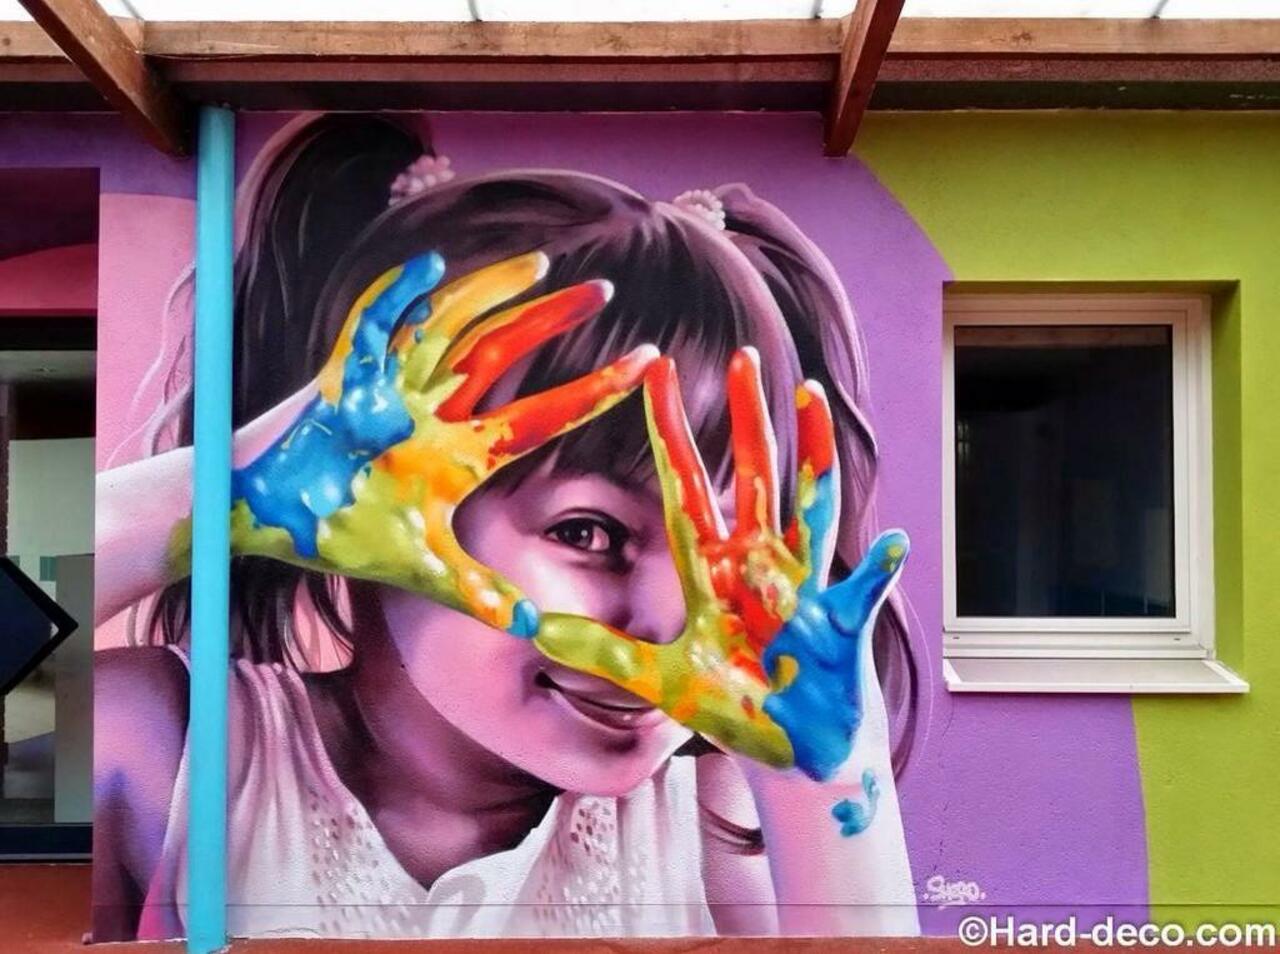 RT @IRH_artist: Artist Hard Deco hyperrealistic #StreetArt portrait located in Paris, France #art #mural #graffiti http://t.co/c15Zb4mNDM